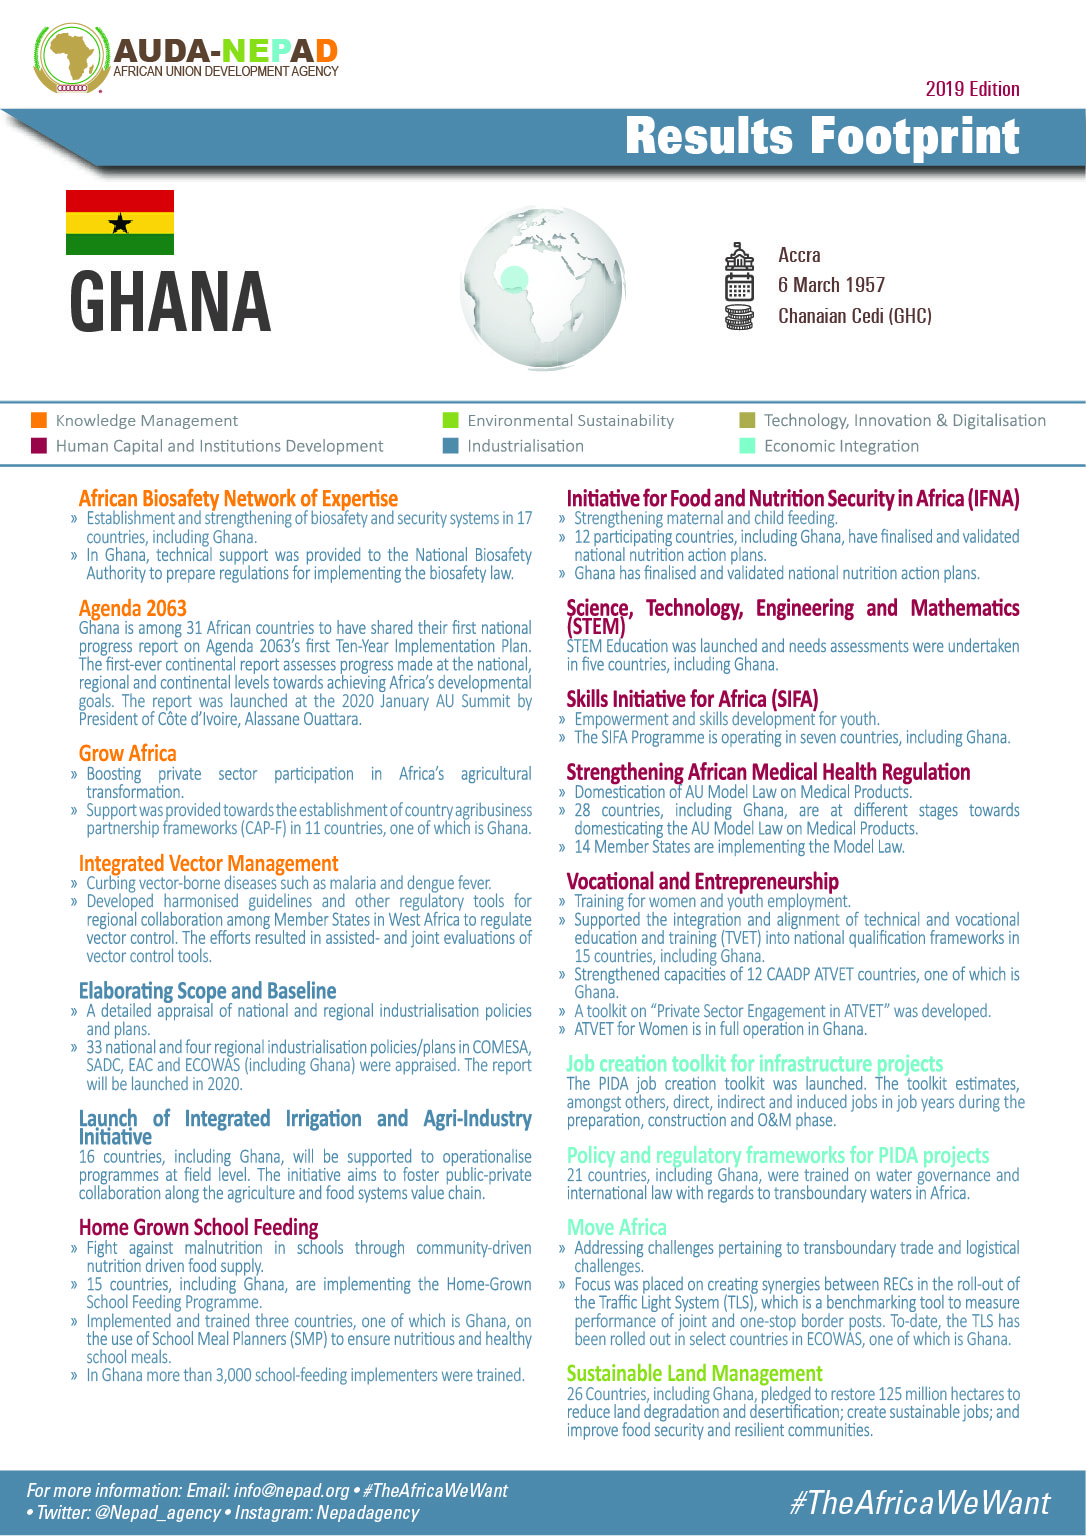 2019 AUDA-NEPAD Footprint: Country Profiles: Ghana